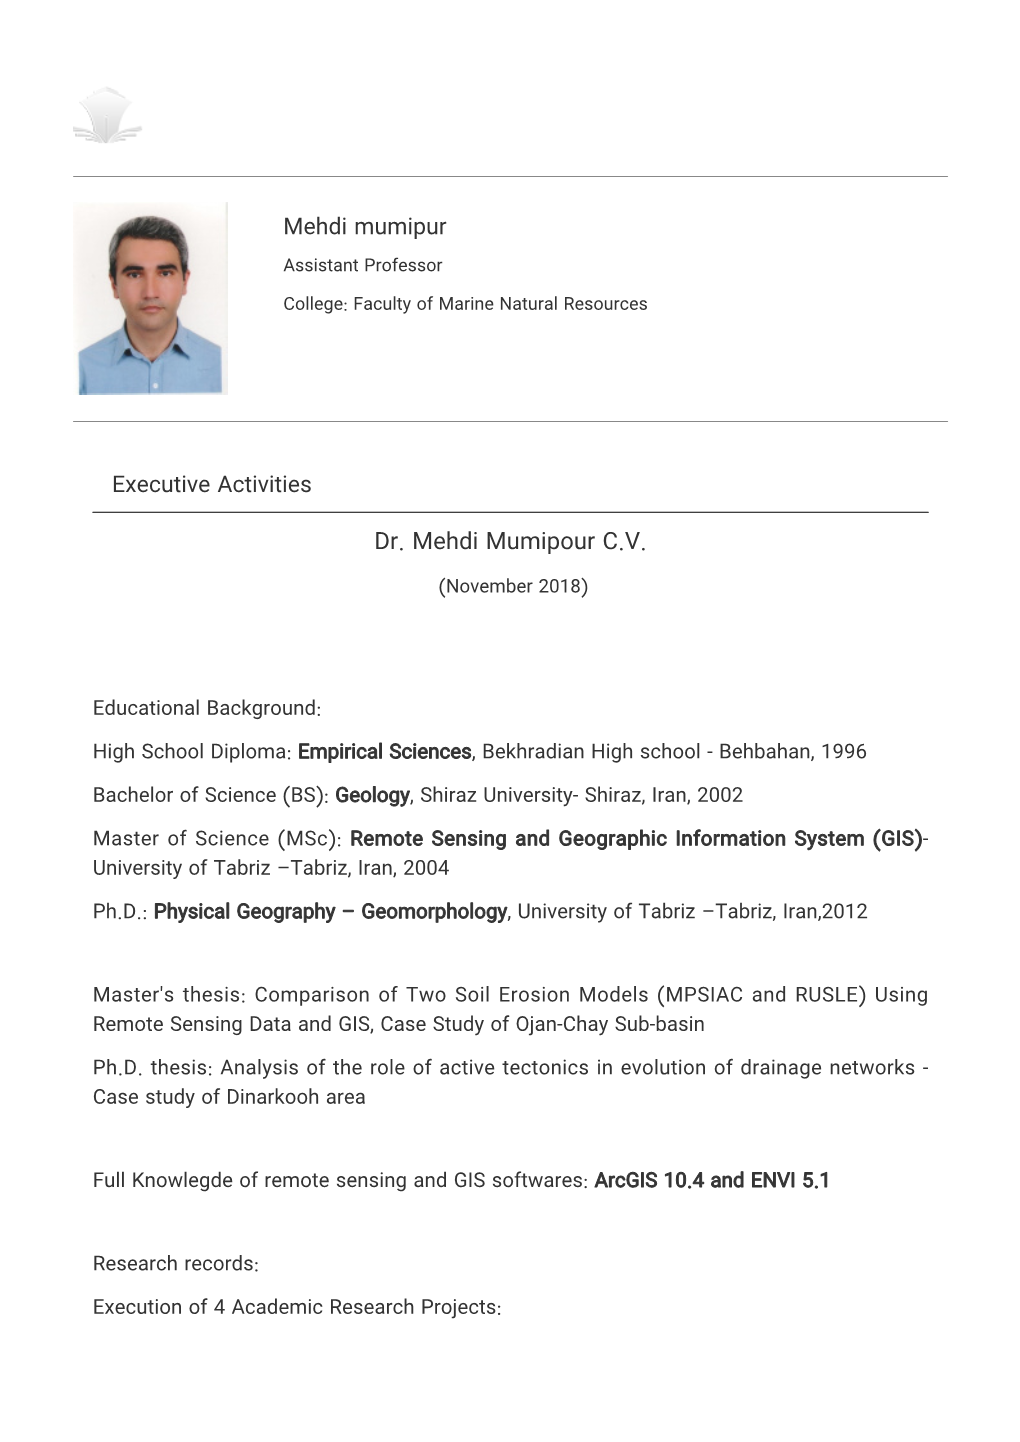 Dr. Mehdi Mumipour C.V